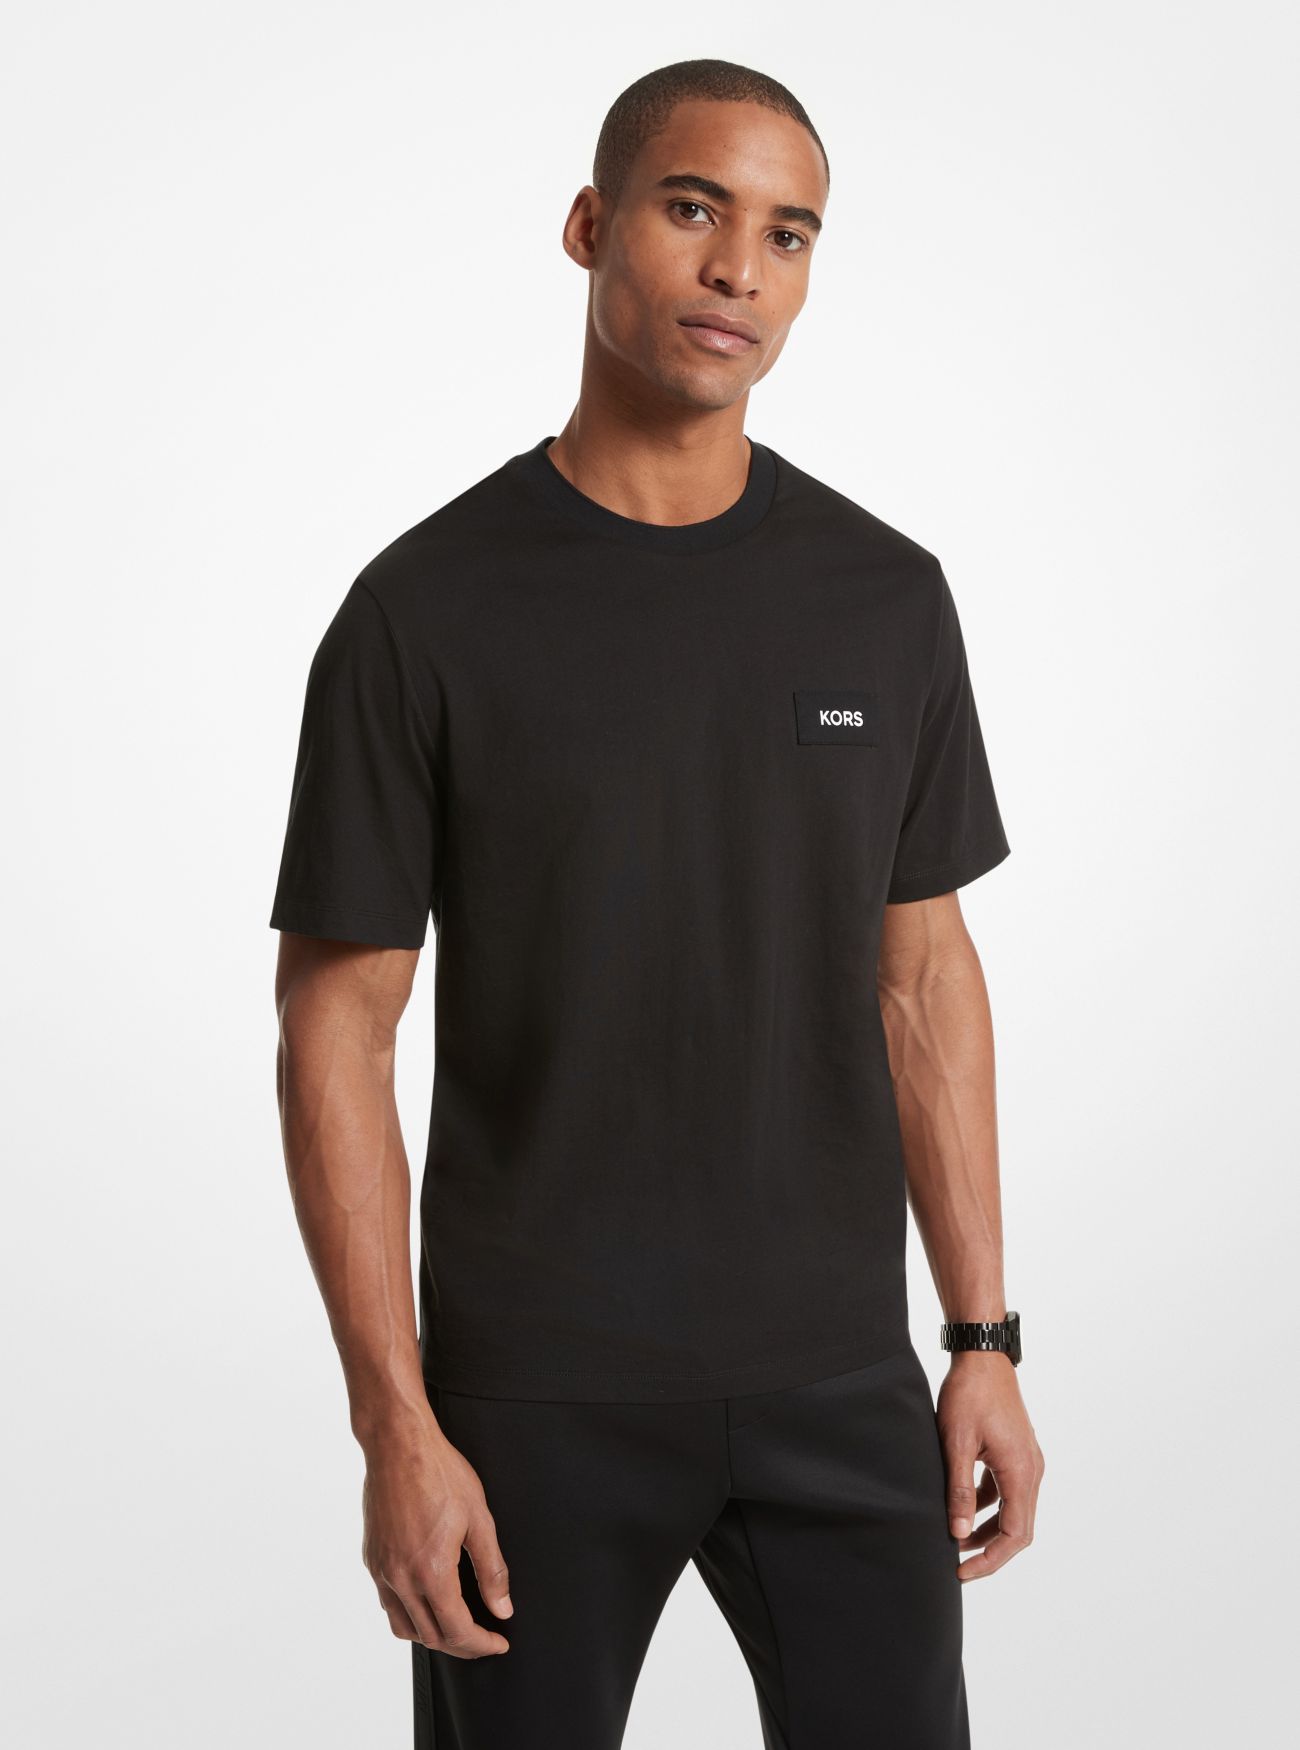 MK Cotton Logo Graphic T-Shirt - Black - Michael Kors